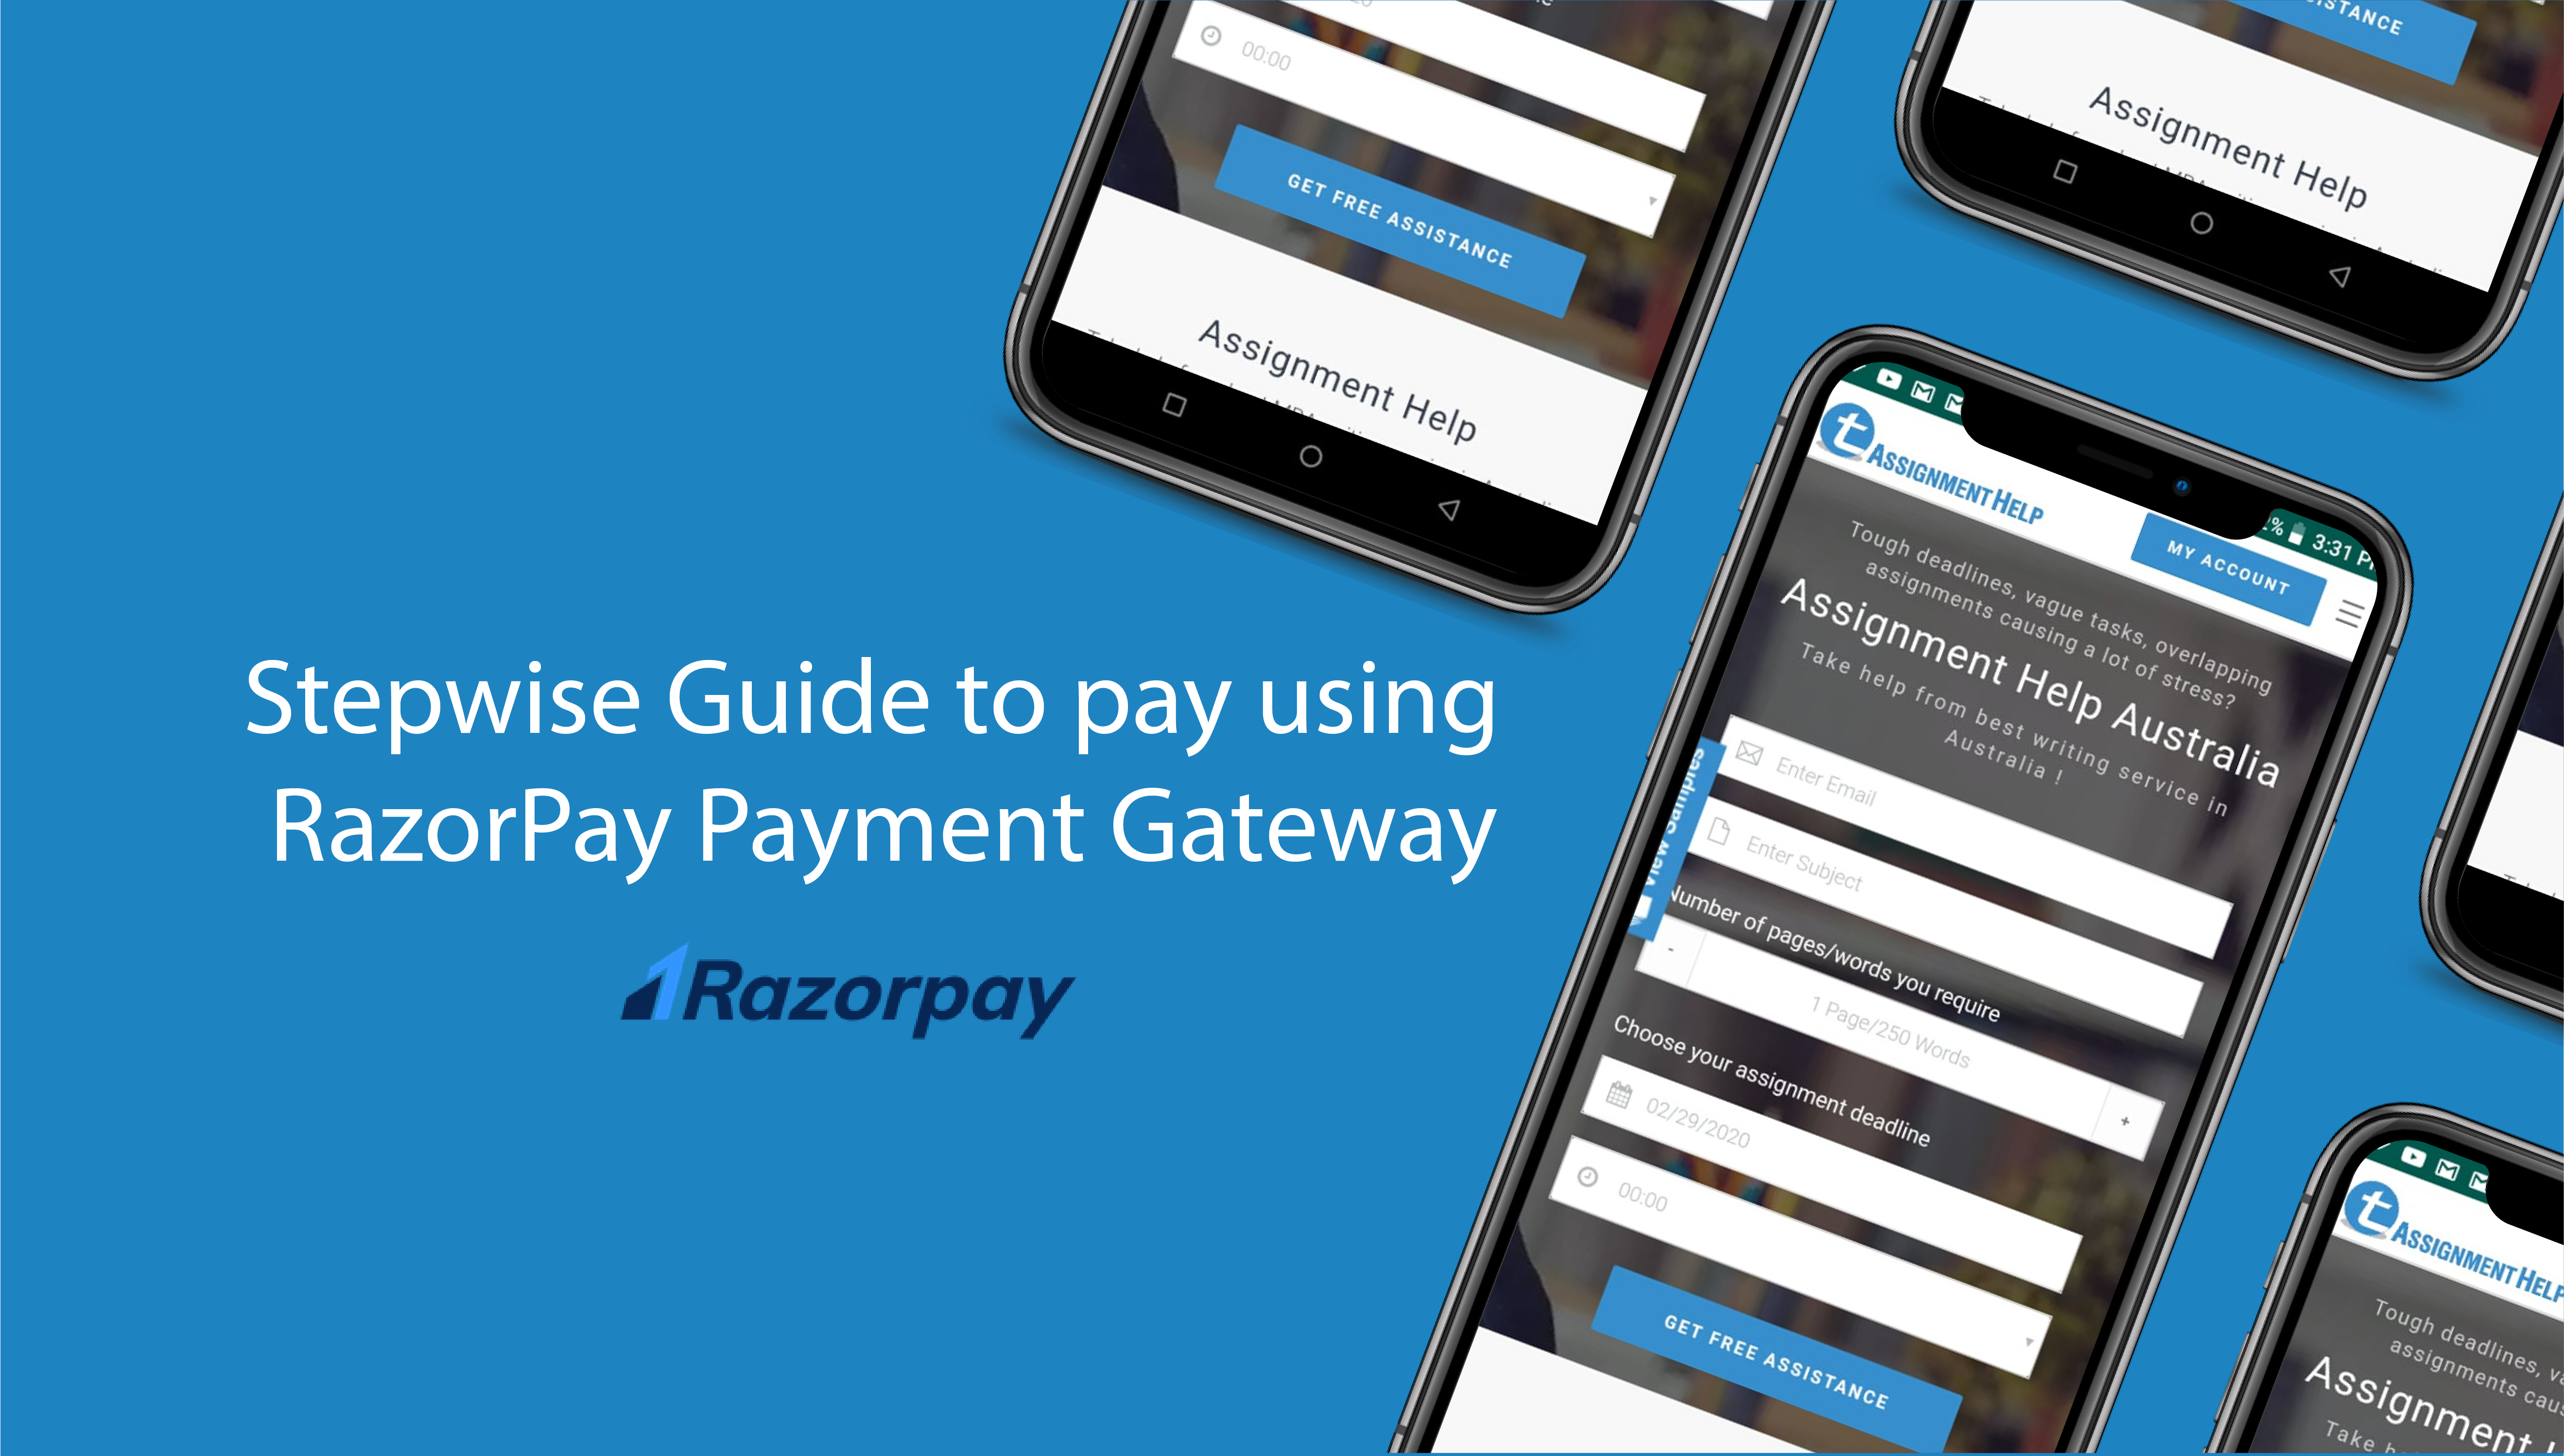 How to pay through Razorpay?